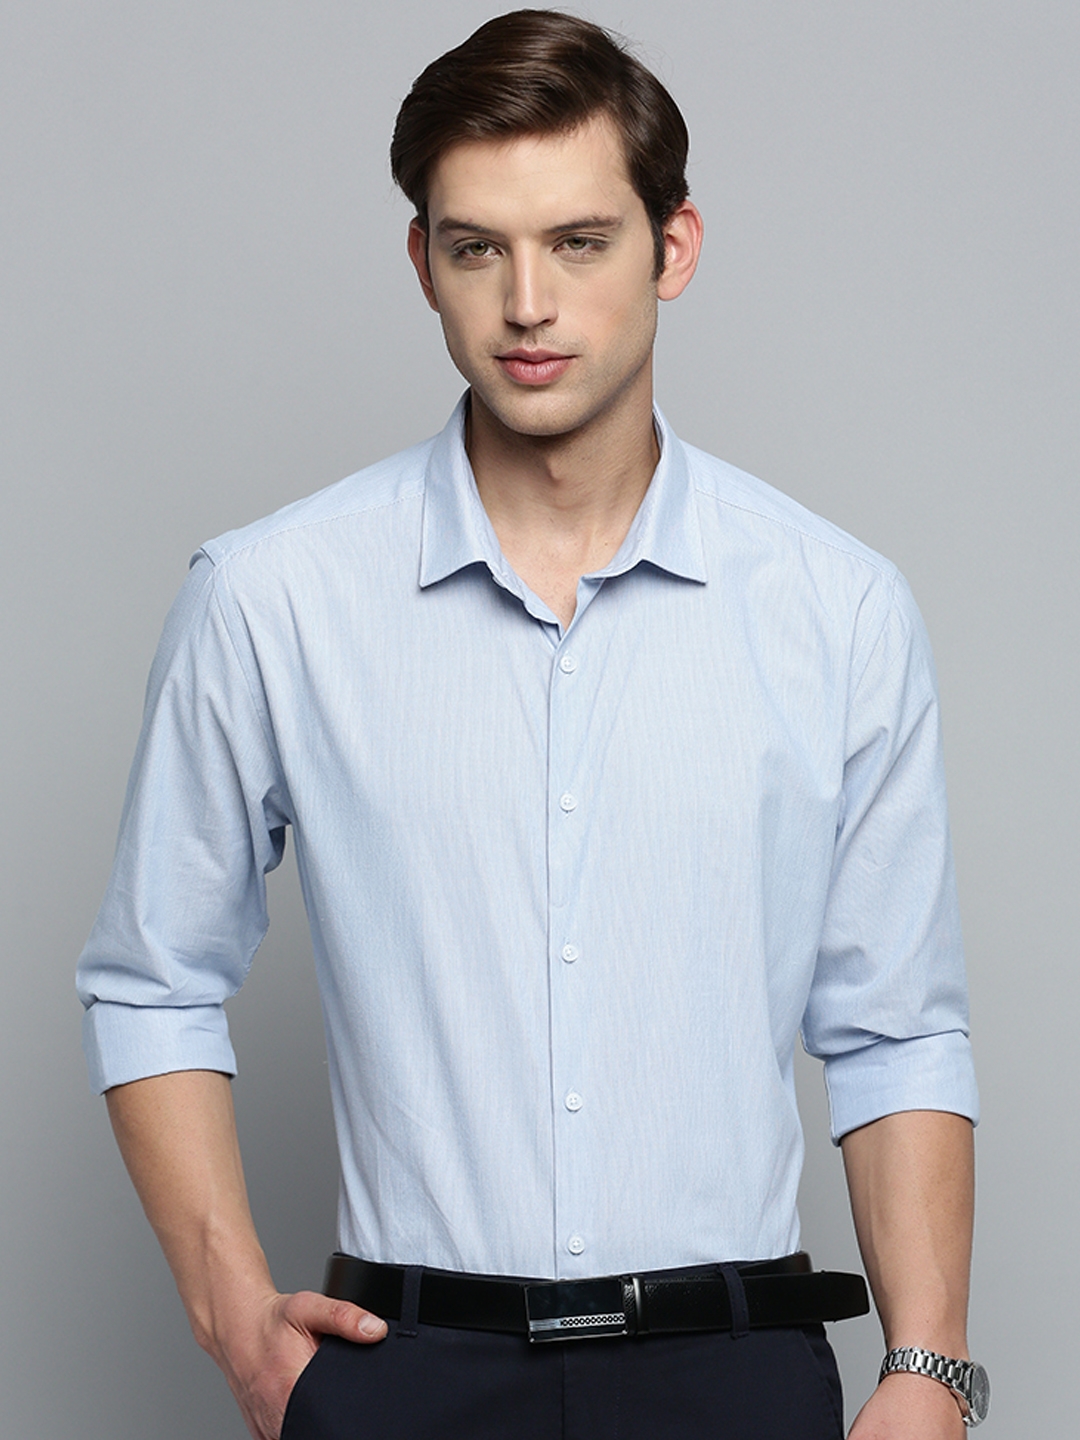 Showoff | SHOWOFF Men's Spread Collar Blue Striped Shirt 1